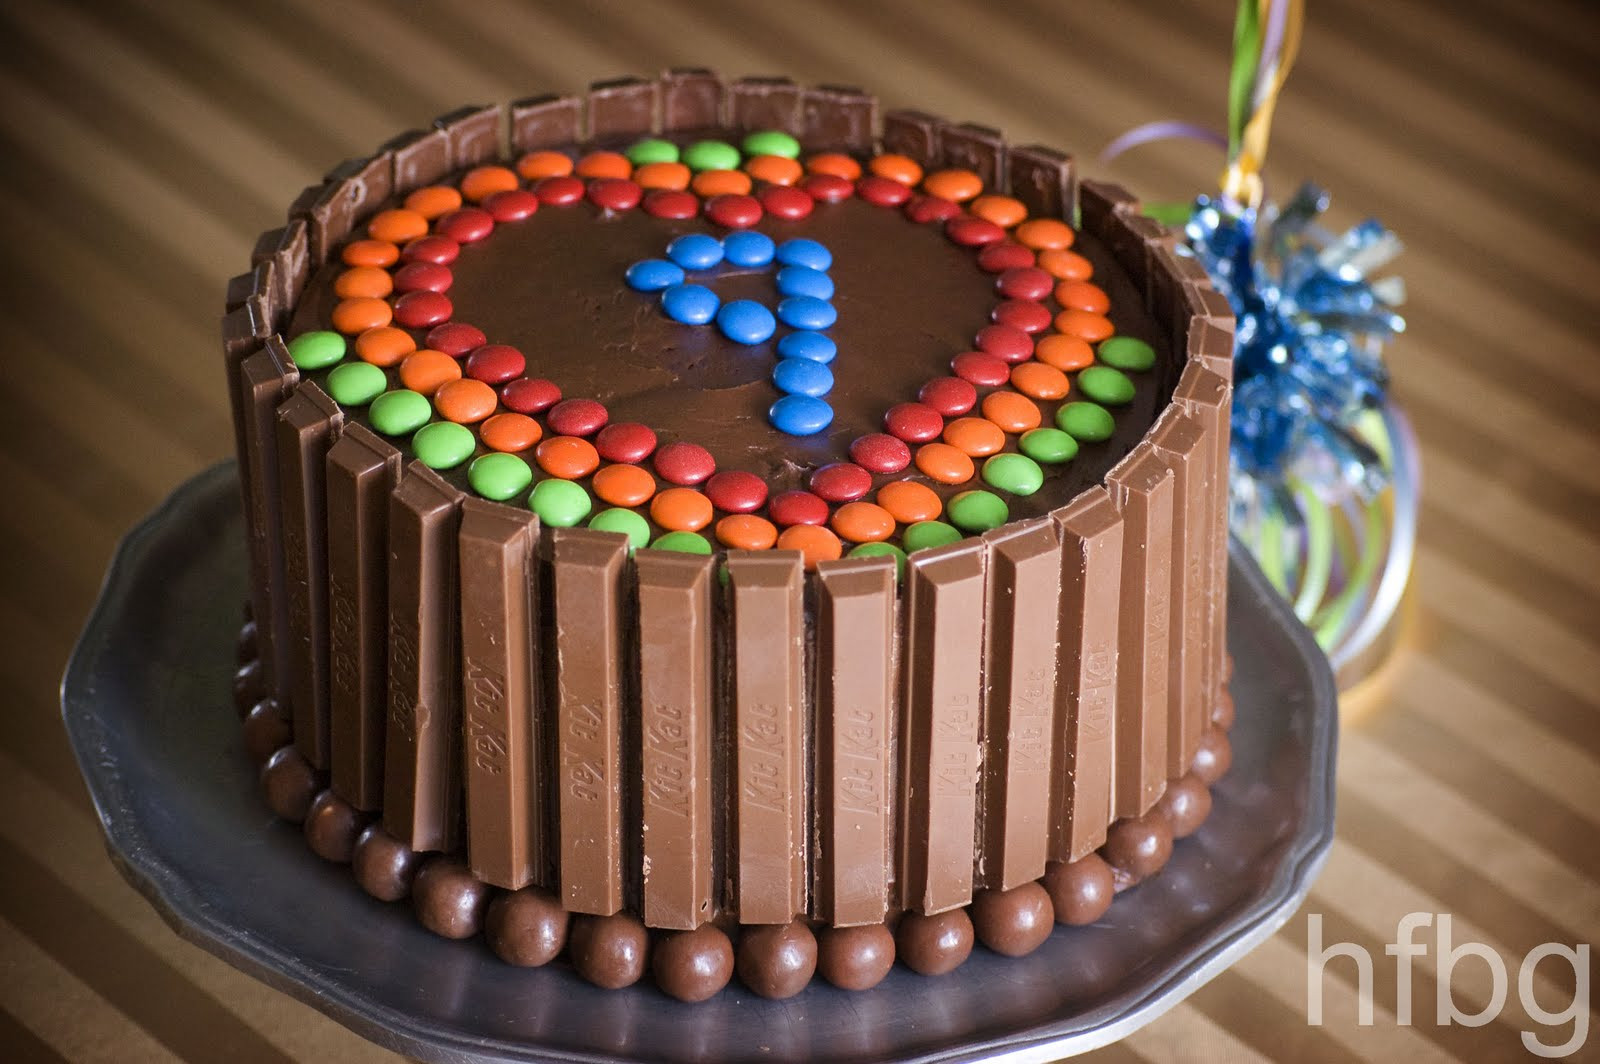 Easy To Make Birthday Cakes
 Homemade Birthday Cake